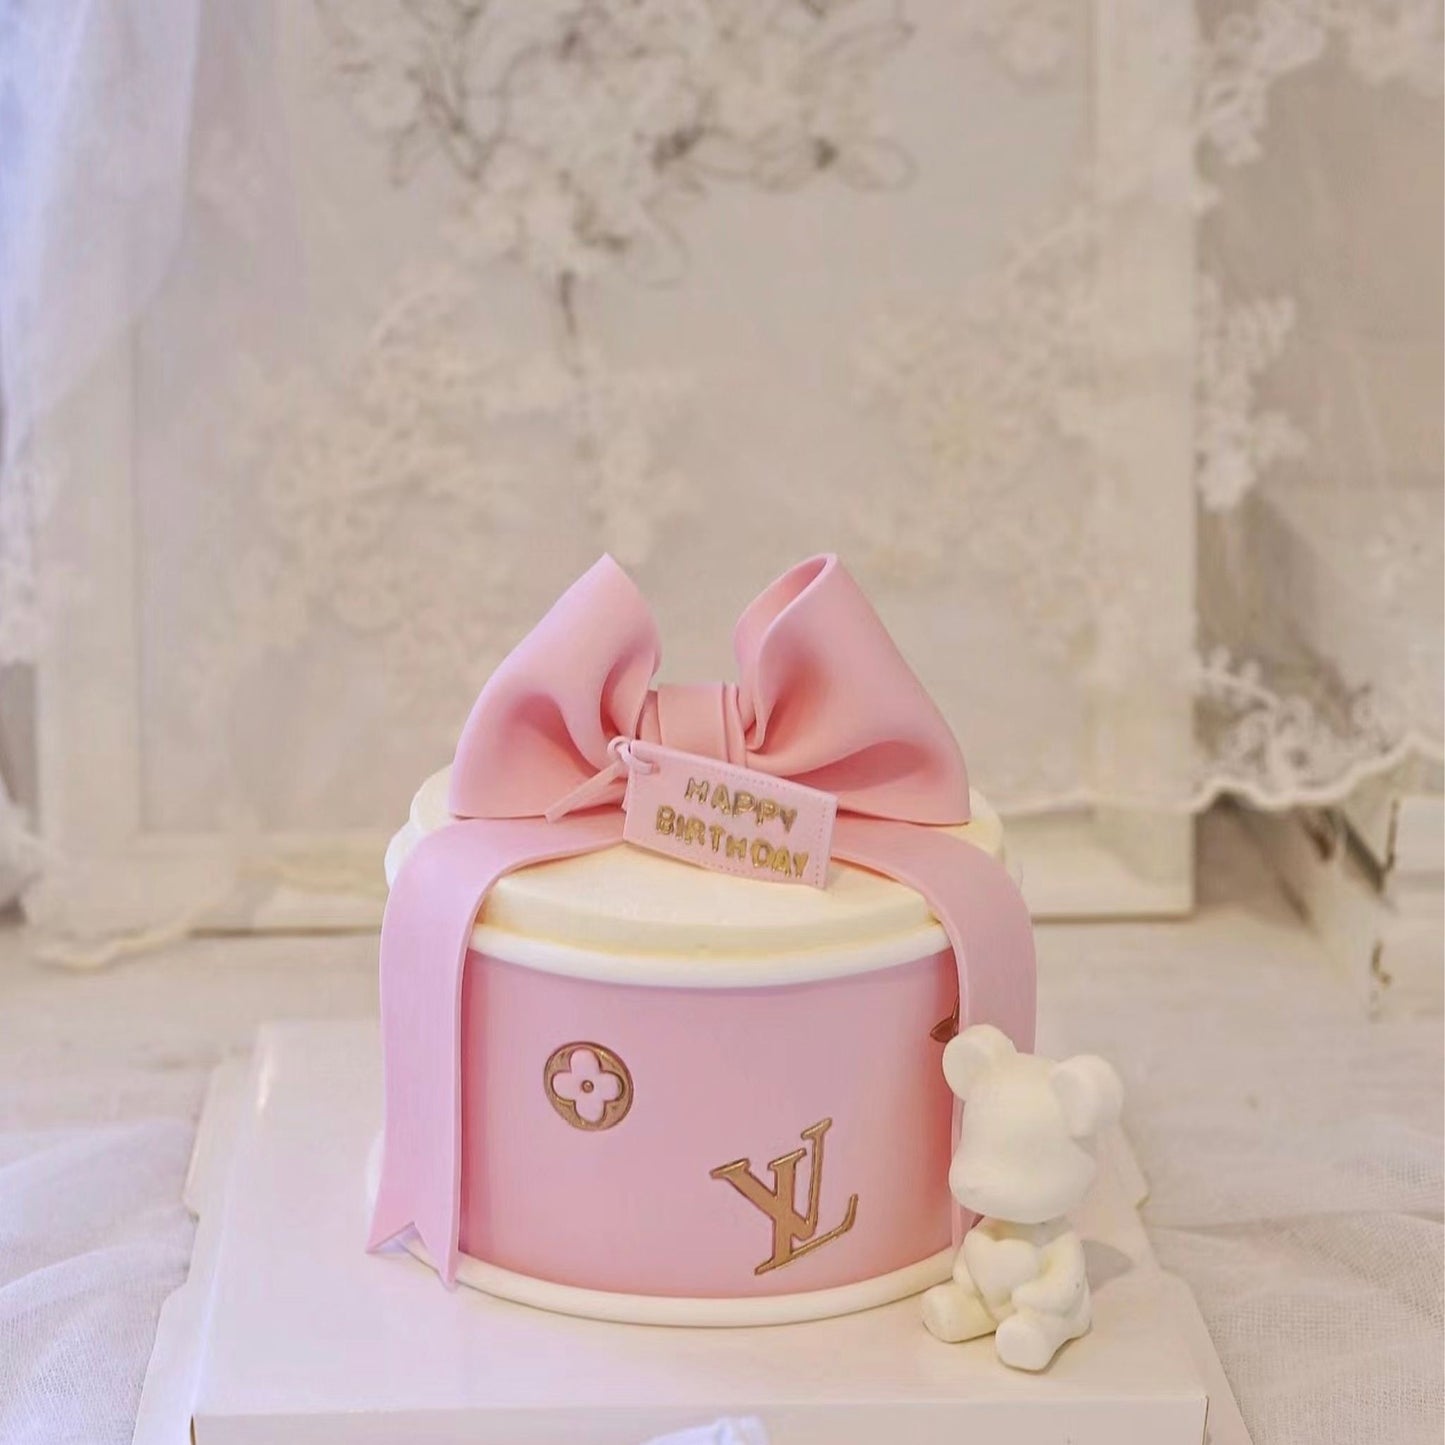 6 inch pink LV cake